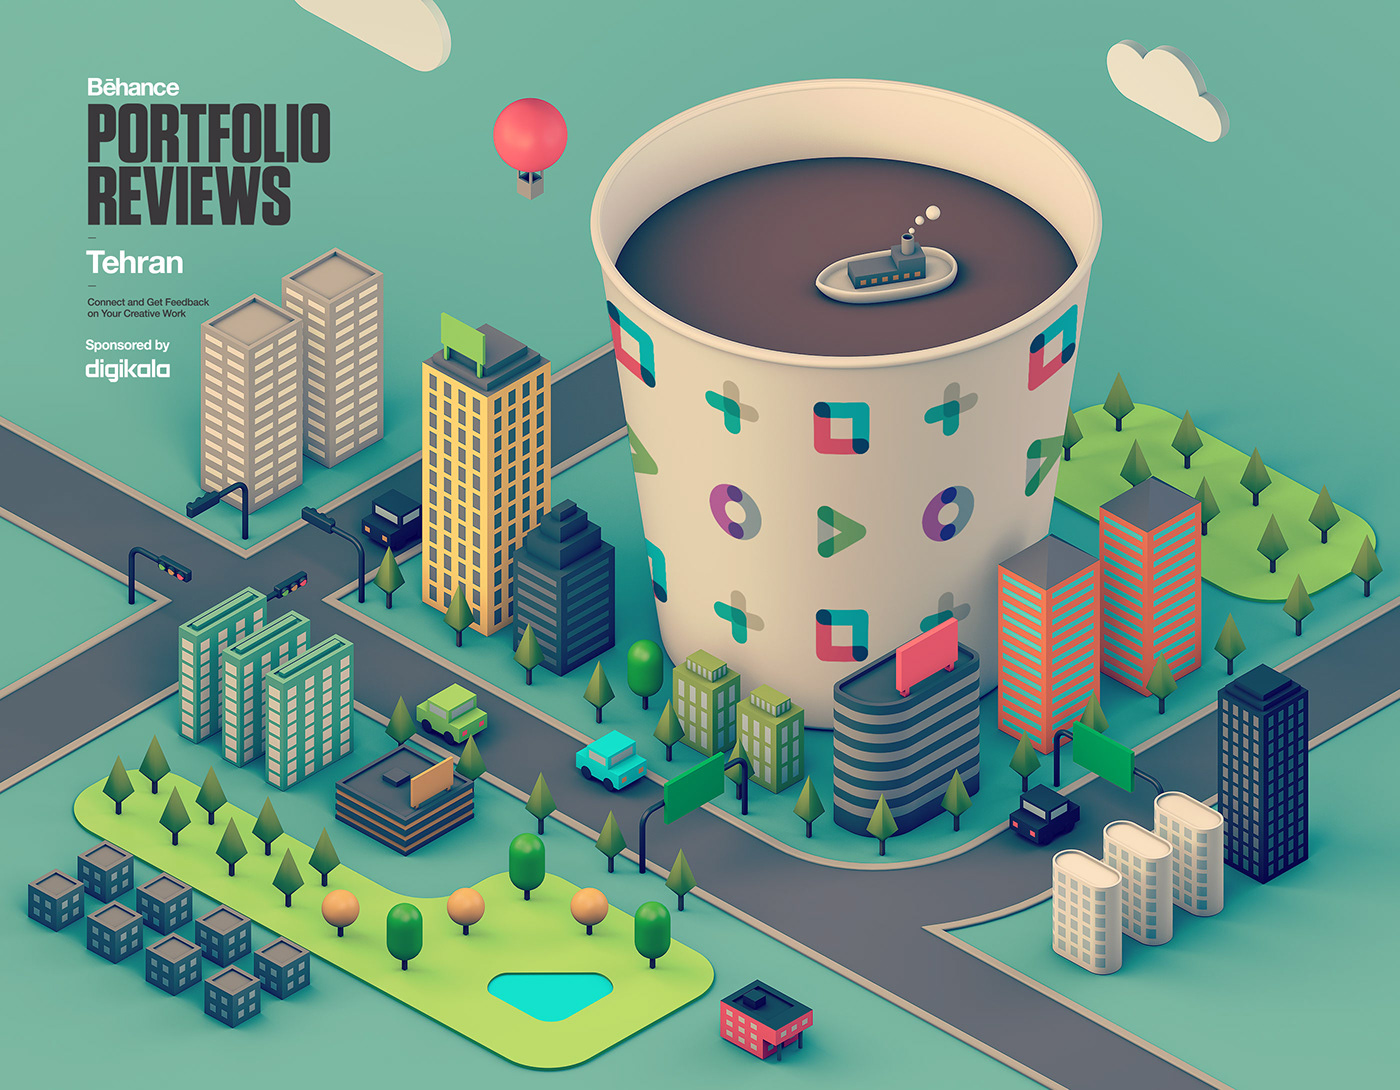 cinema4d Isometric cup city Behance portfolio review Event Gathering